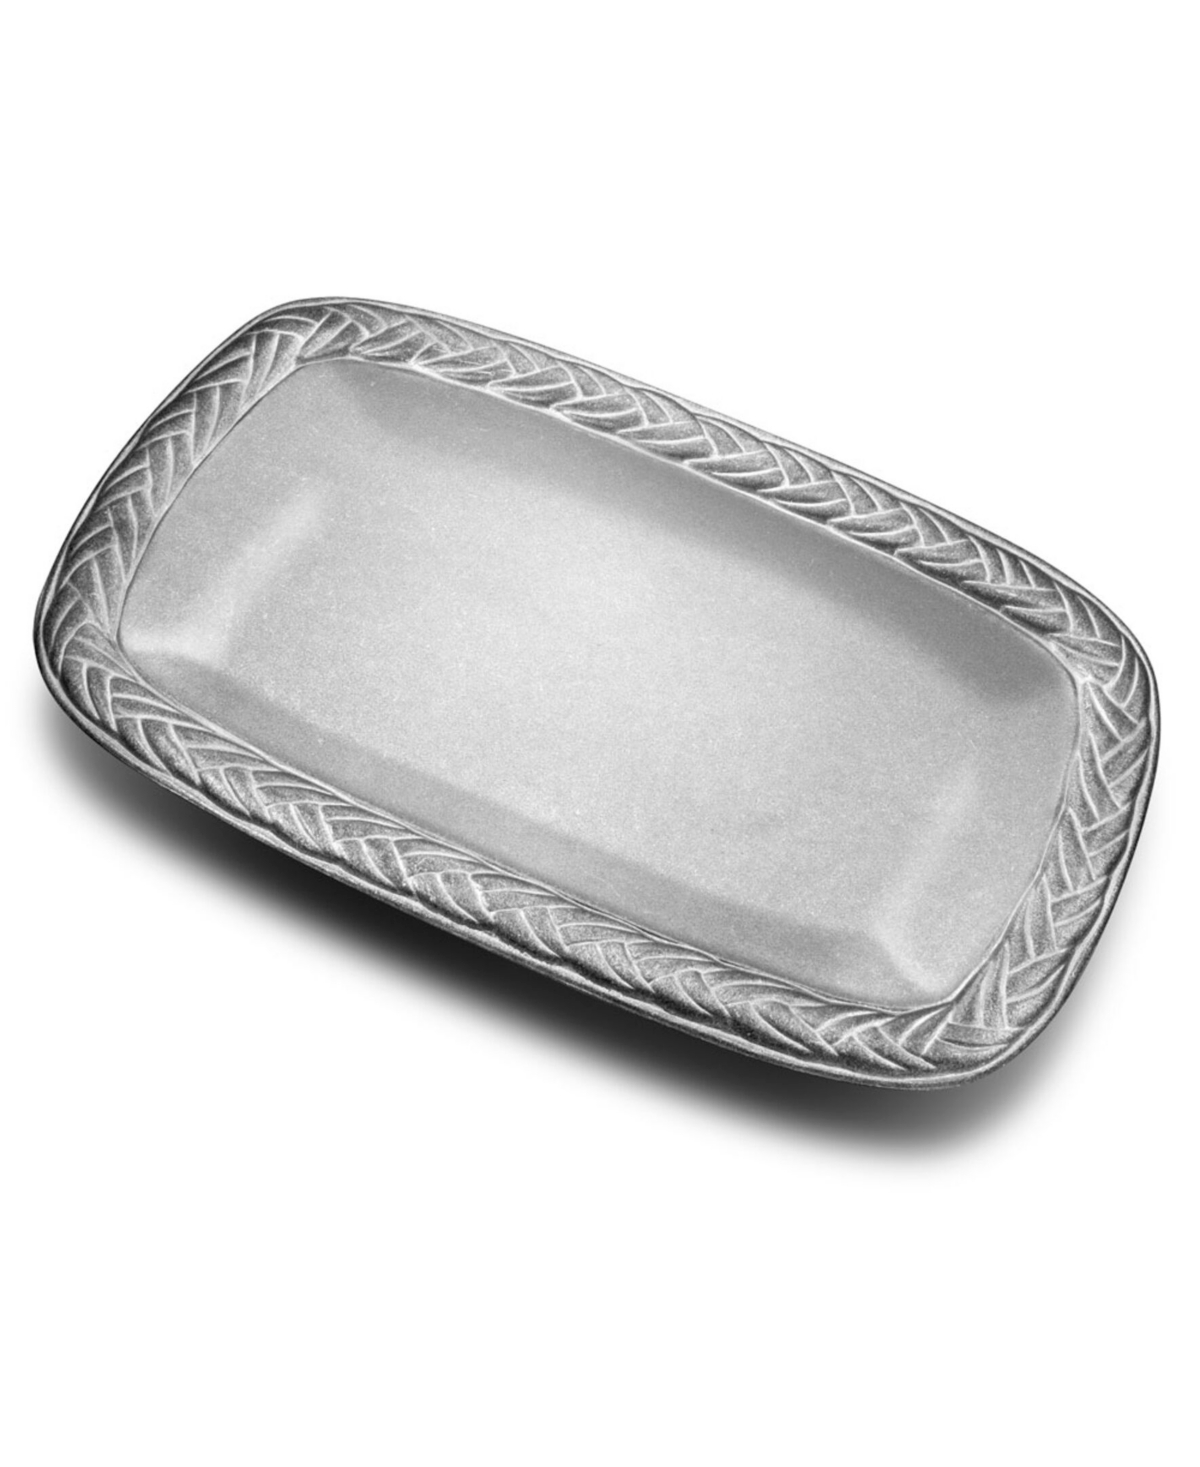 Wilton Armetale Gourmet Grillware Grill Tray In Silver